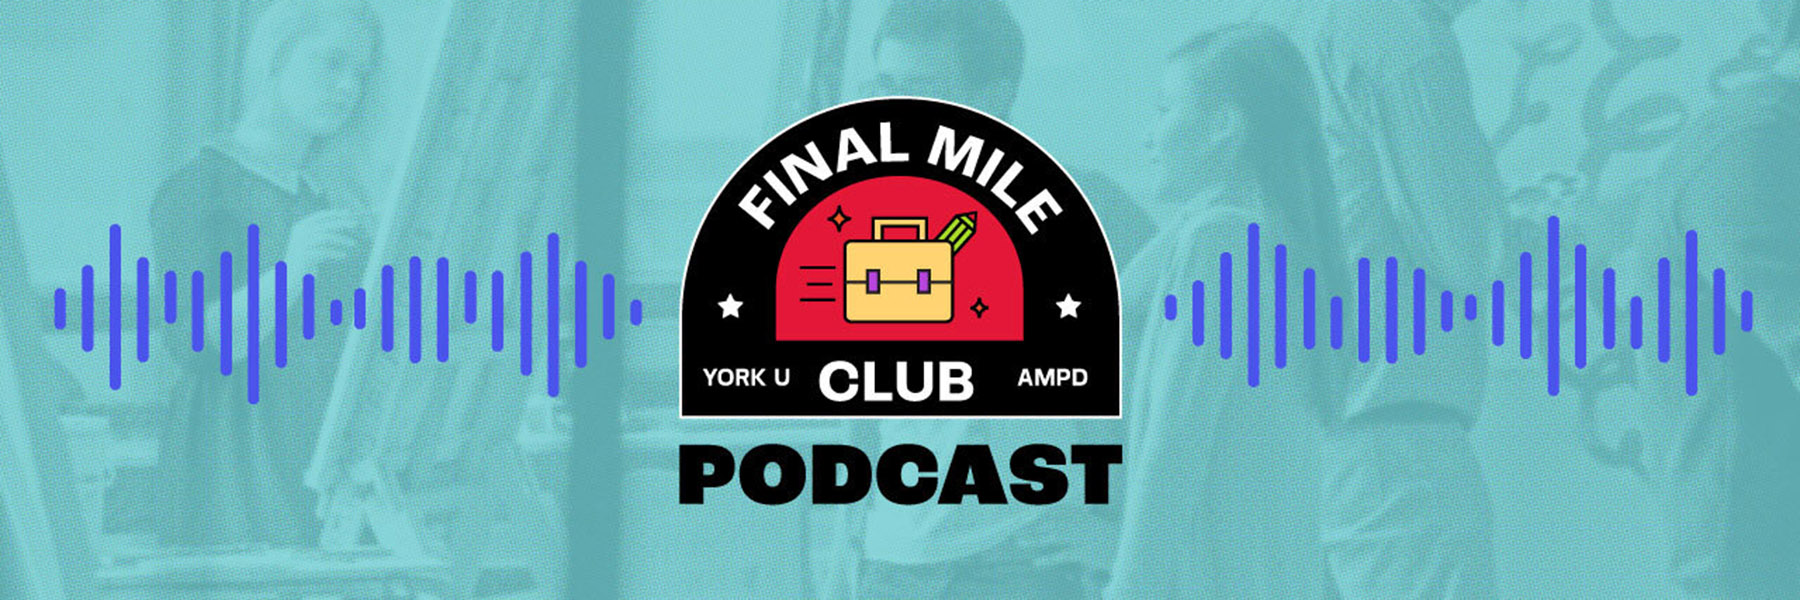 Final Mile Podcast banner